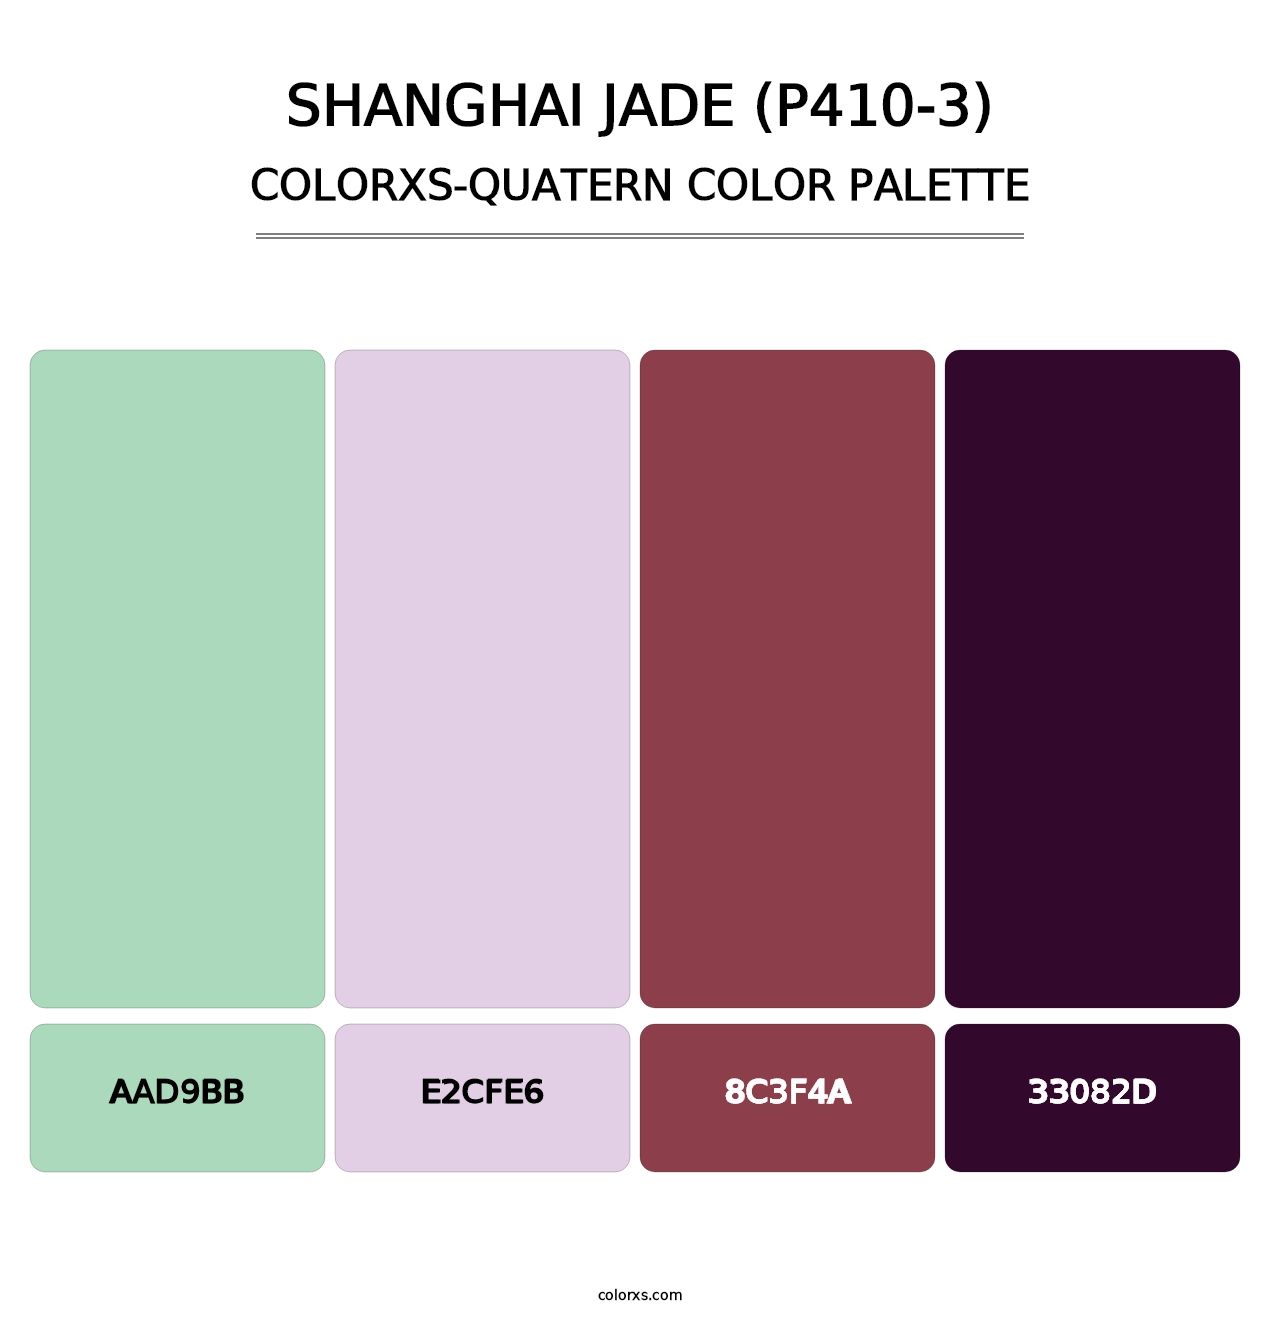 Shanghai Jade (P410-3) - Colorxs Quatern Palette